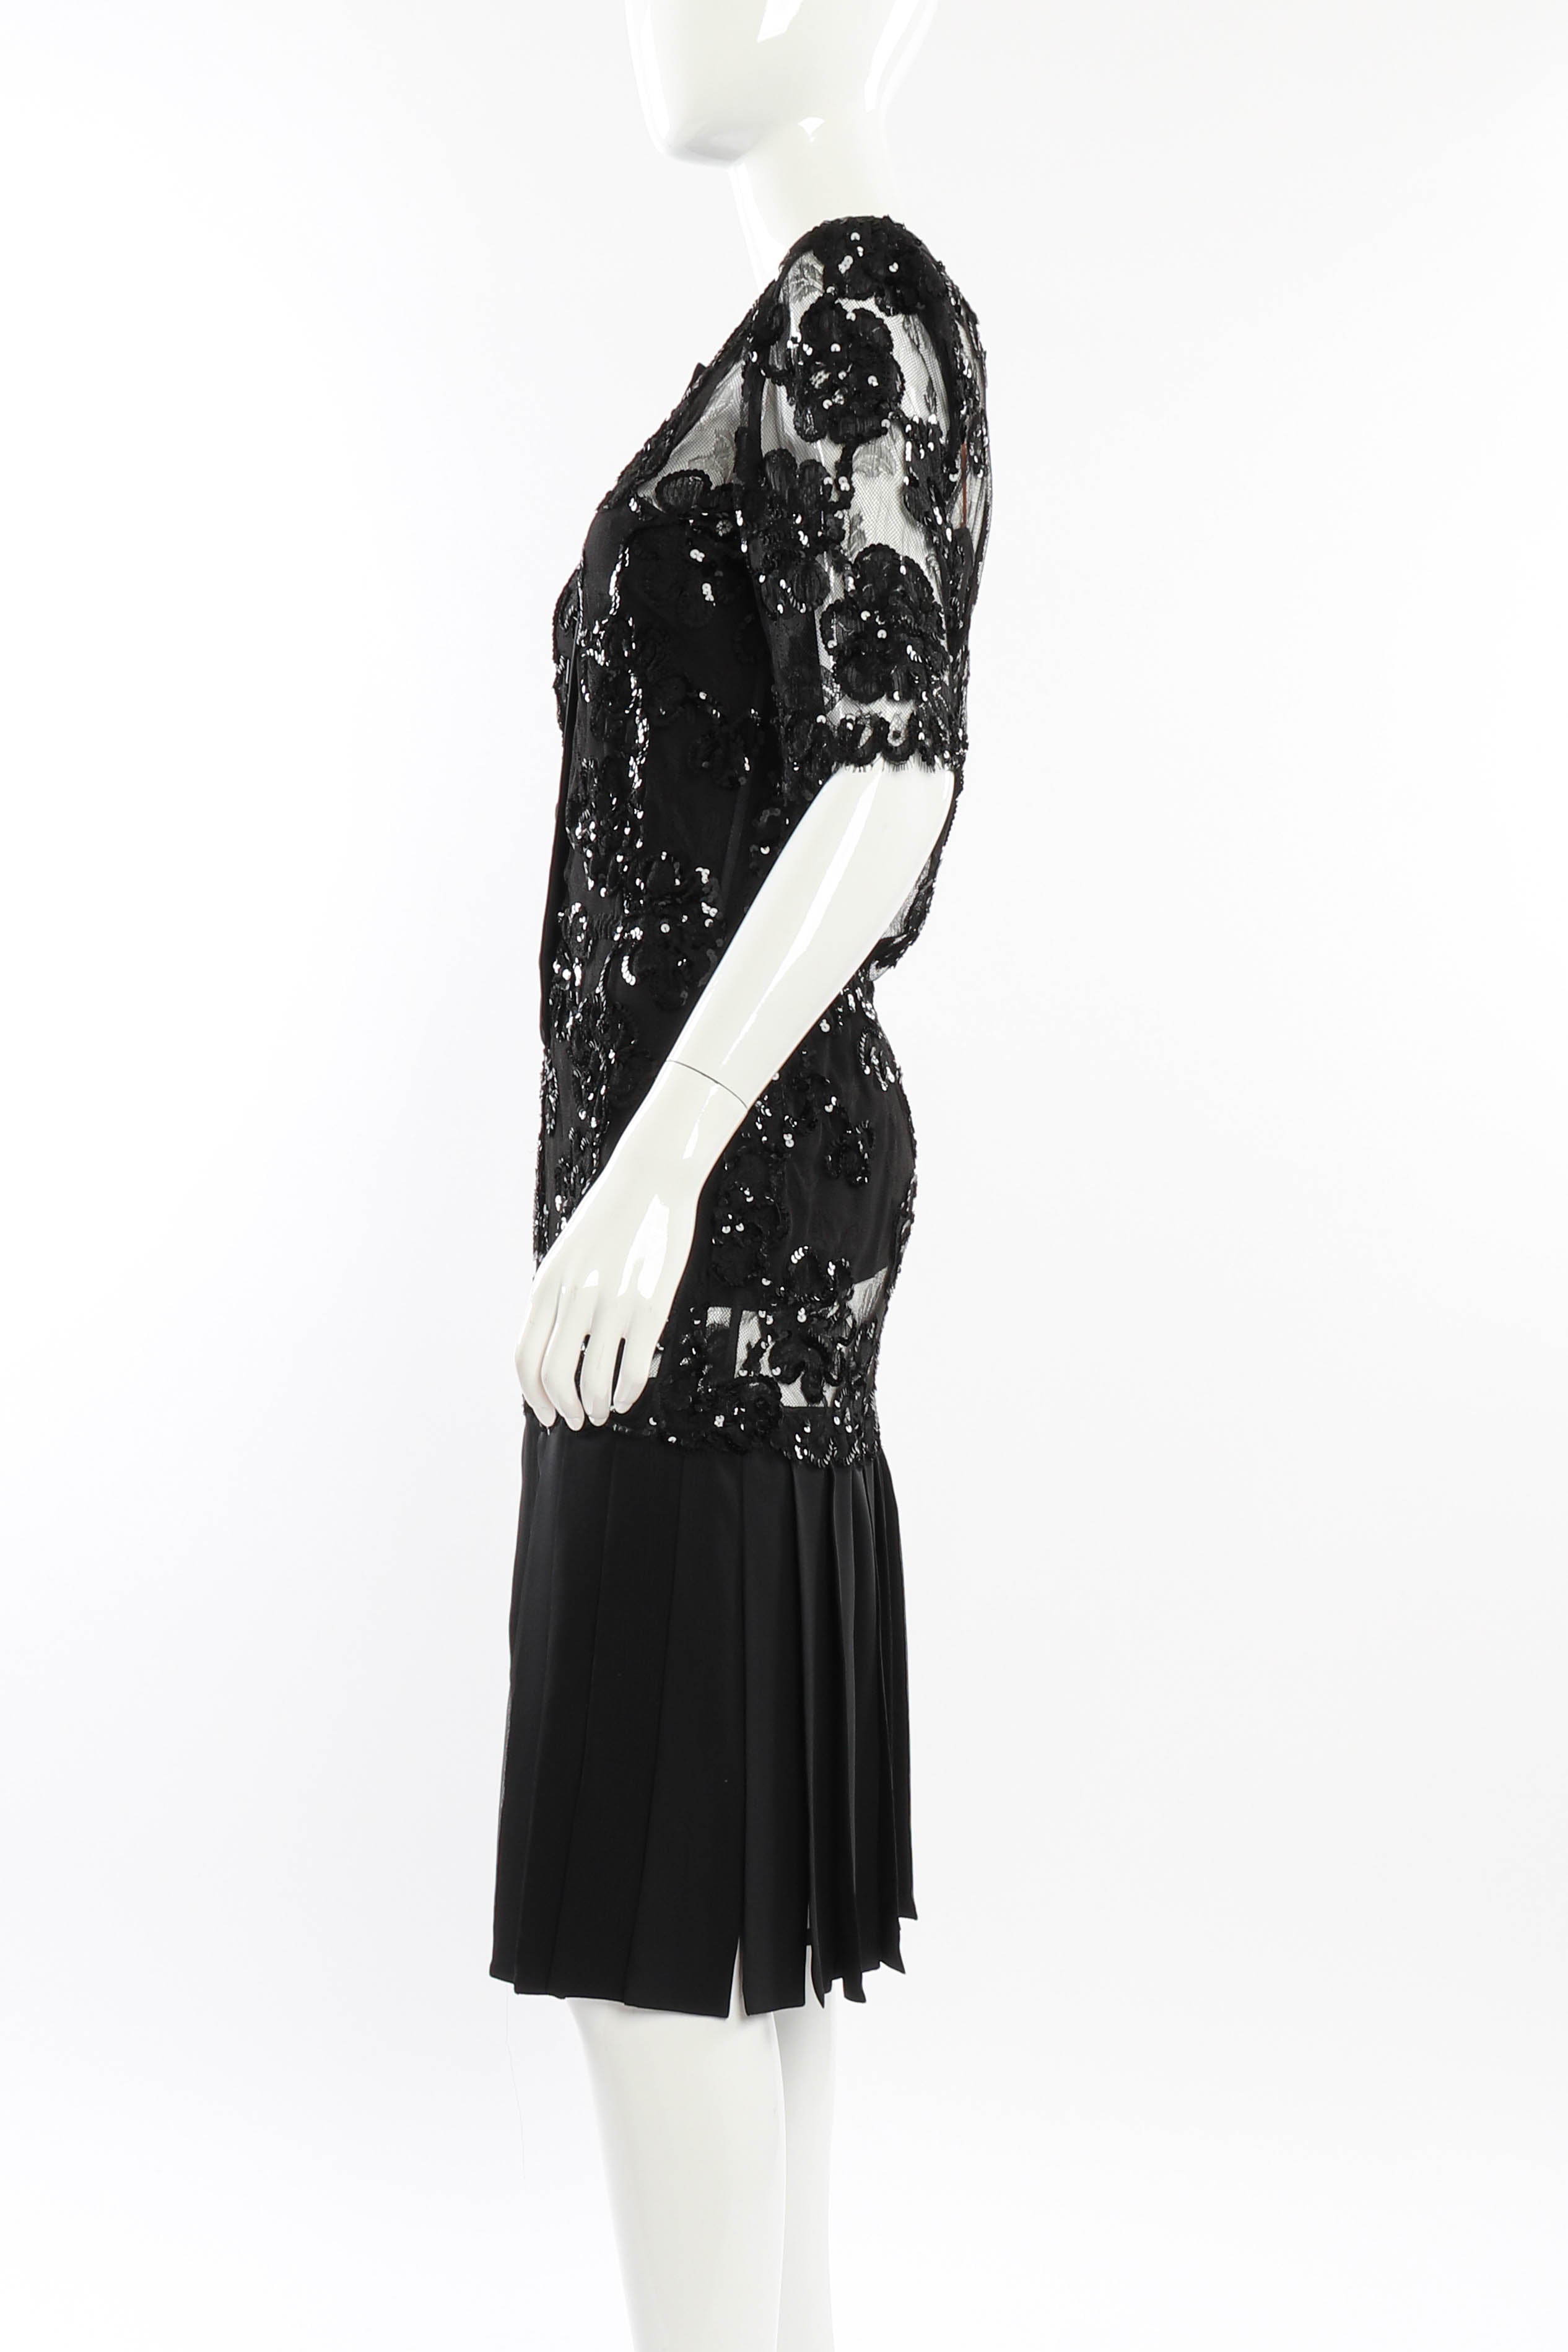 Vintage Adolfo Sequin Lace Dress side on mannequin @recessla